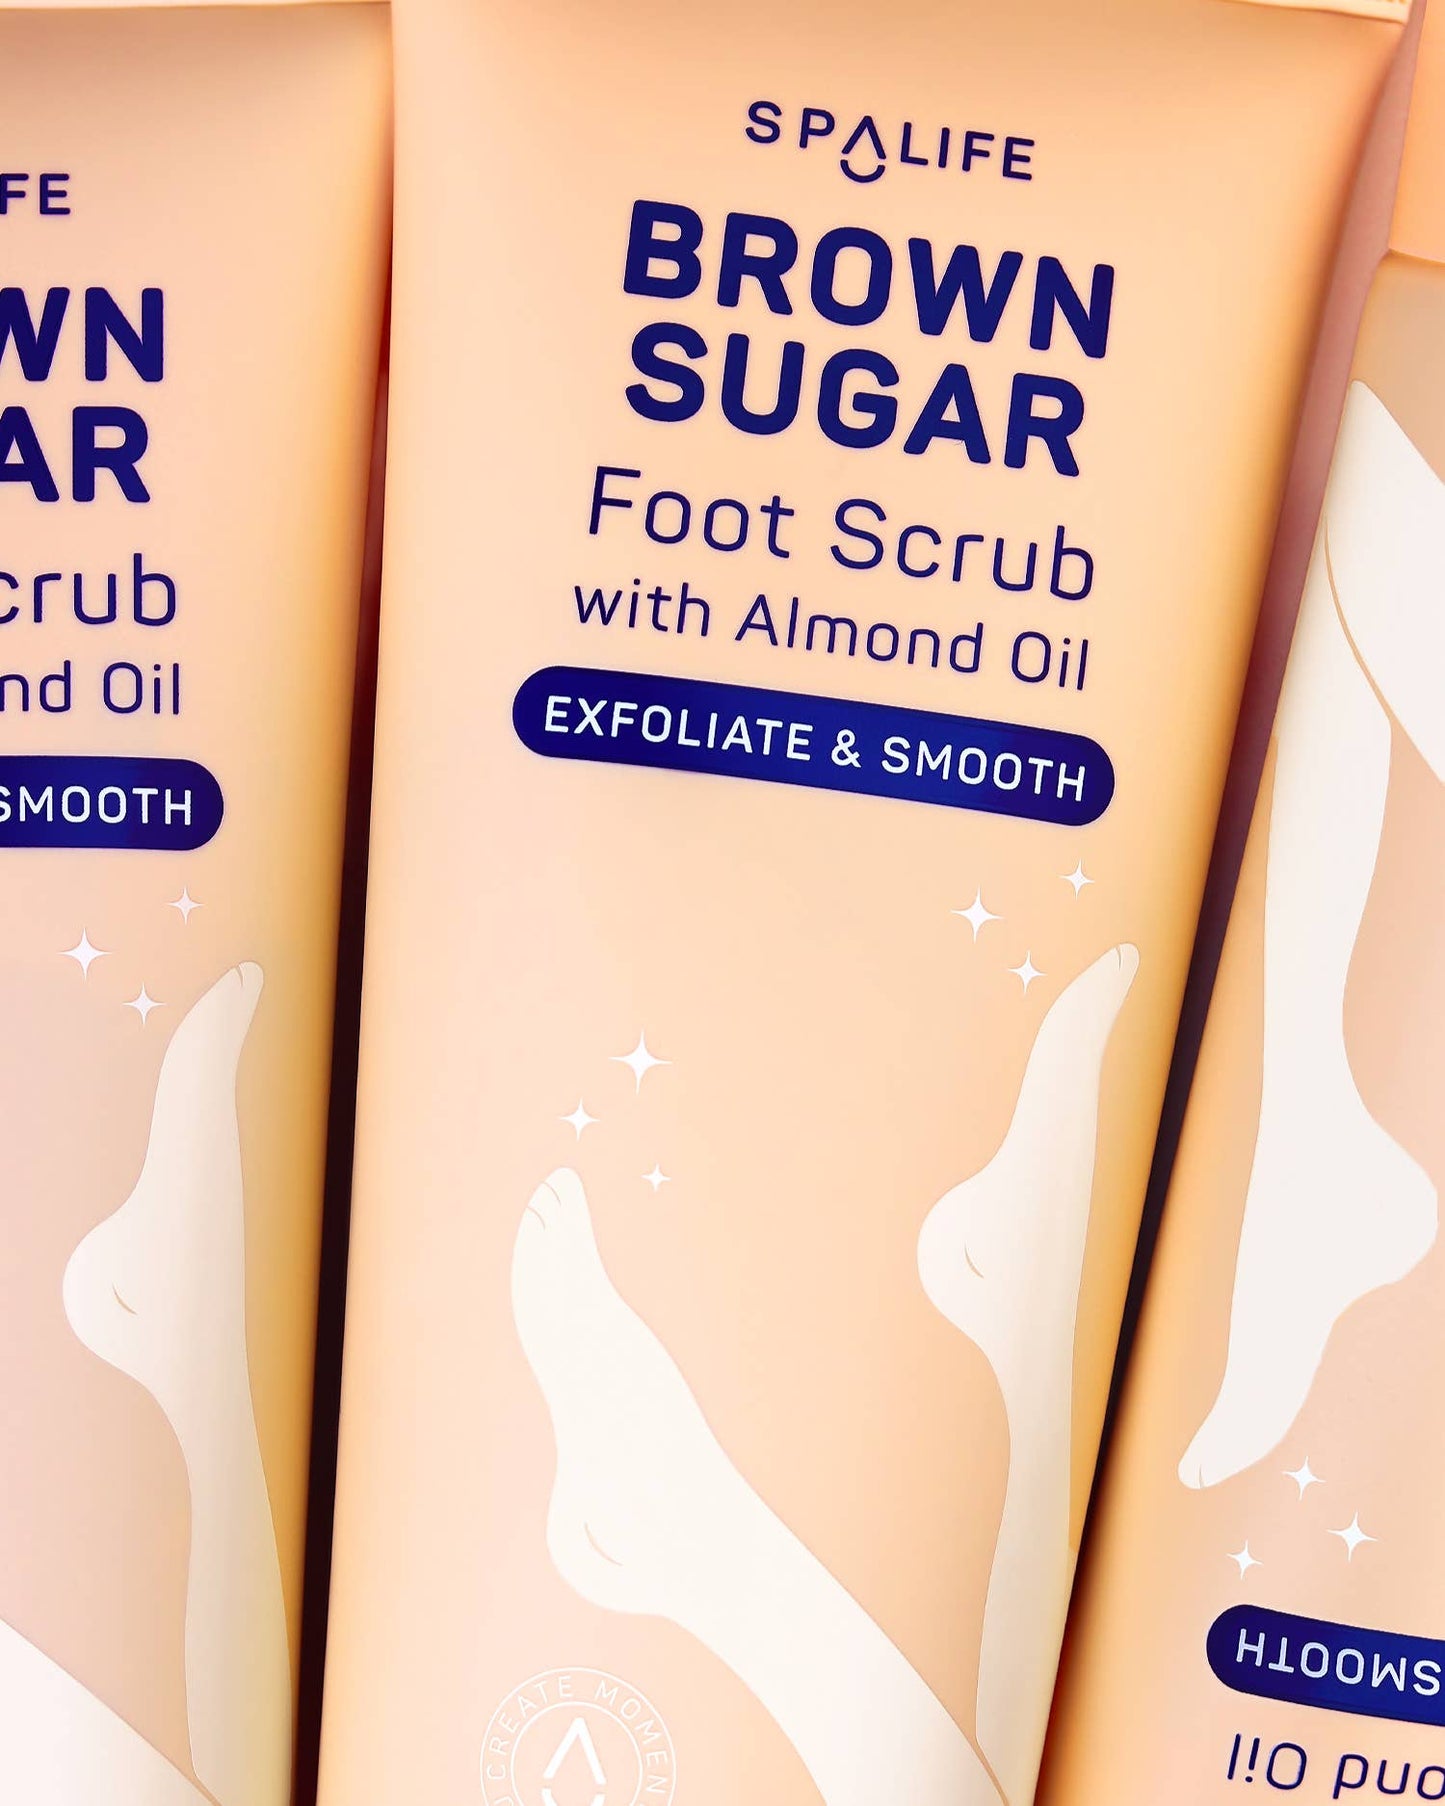 Brown Sugar Exfoliating Foot Scrub - Foot treatment